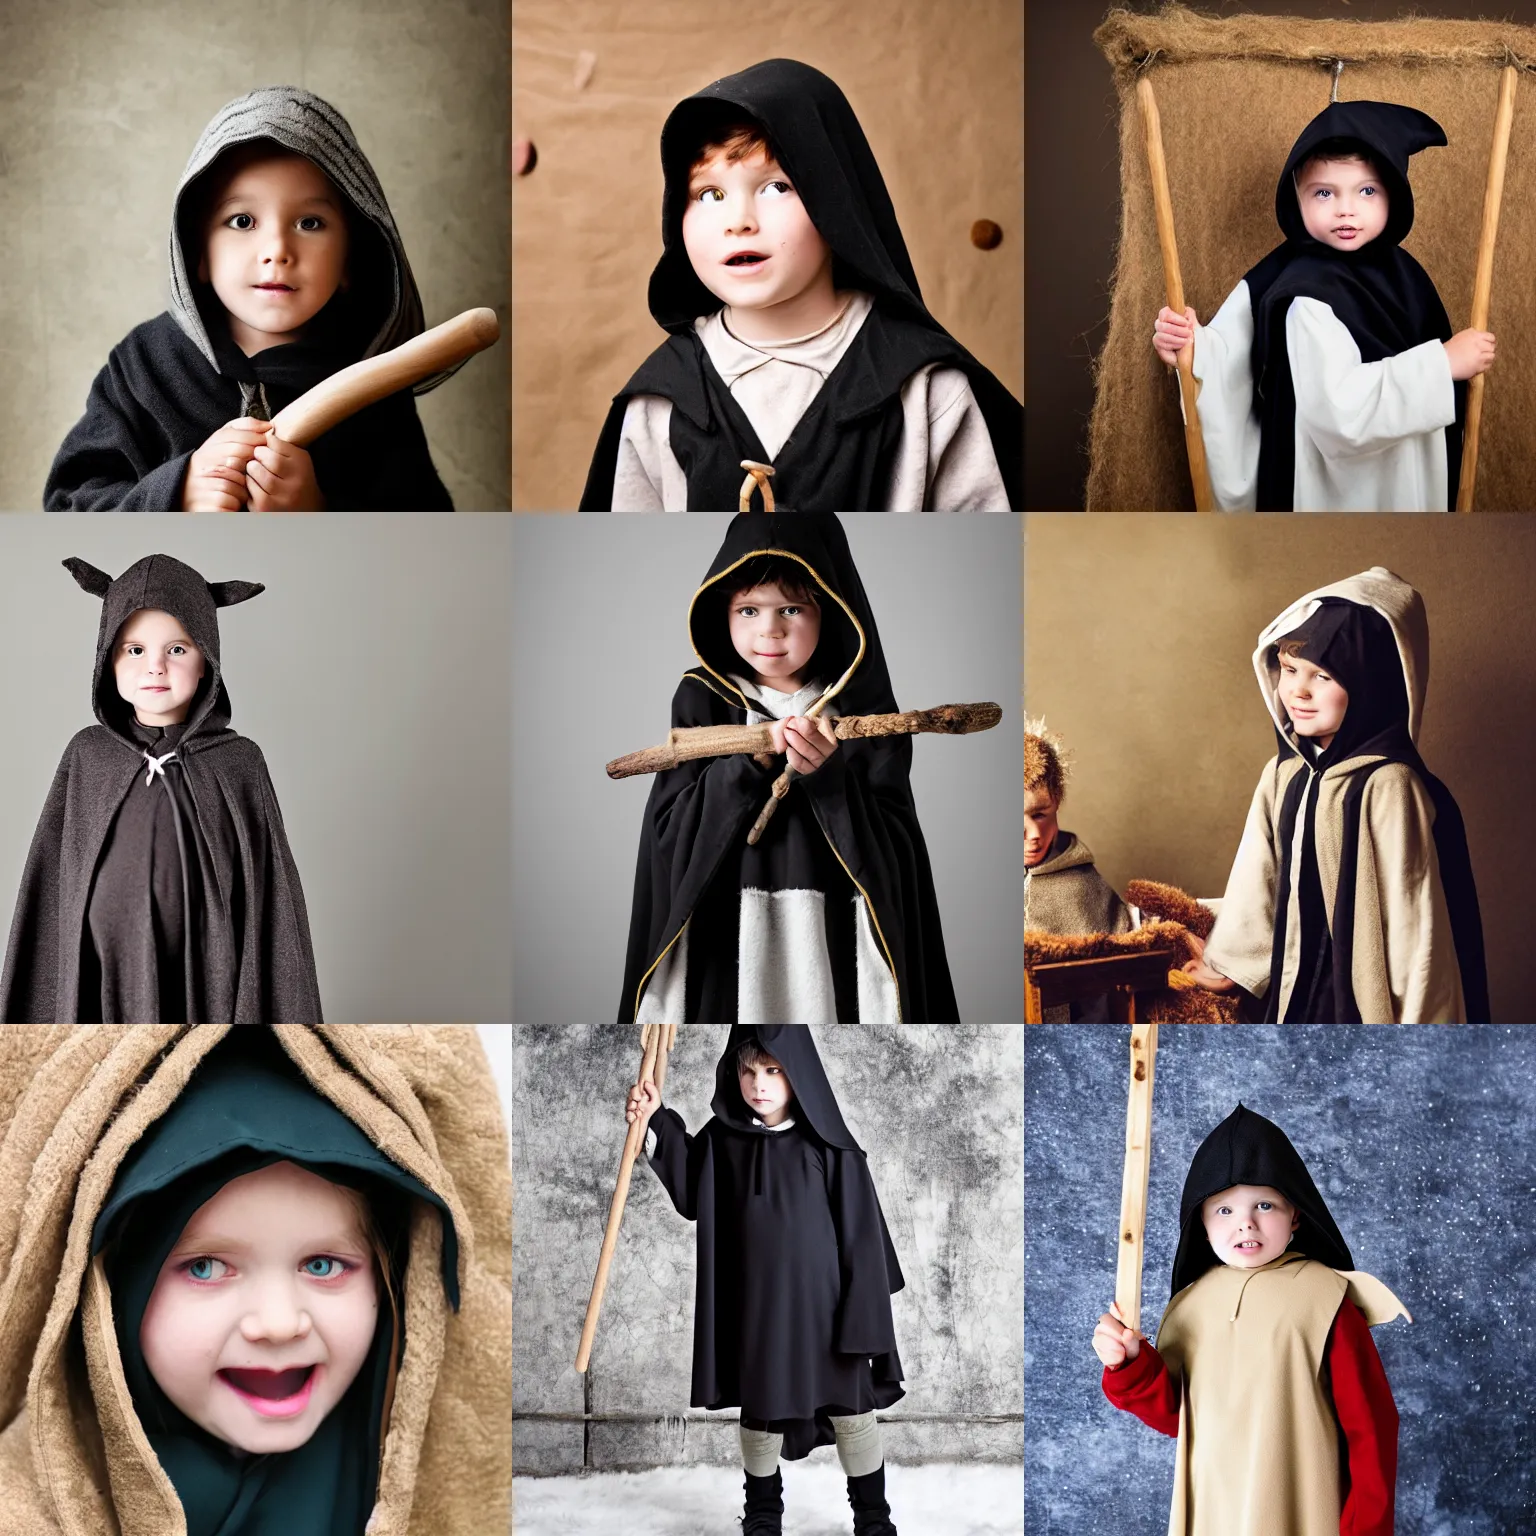 Prompt: single black child dressed as shepherd for a nativity play, hooded cloak, shepherd's crook, photo, indoors, mm, iso, trending